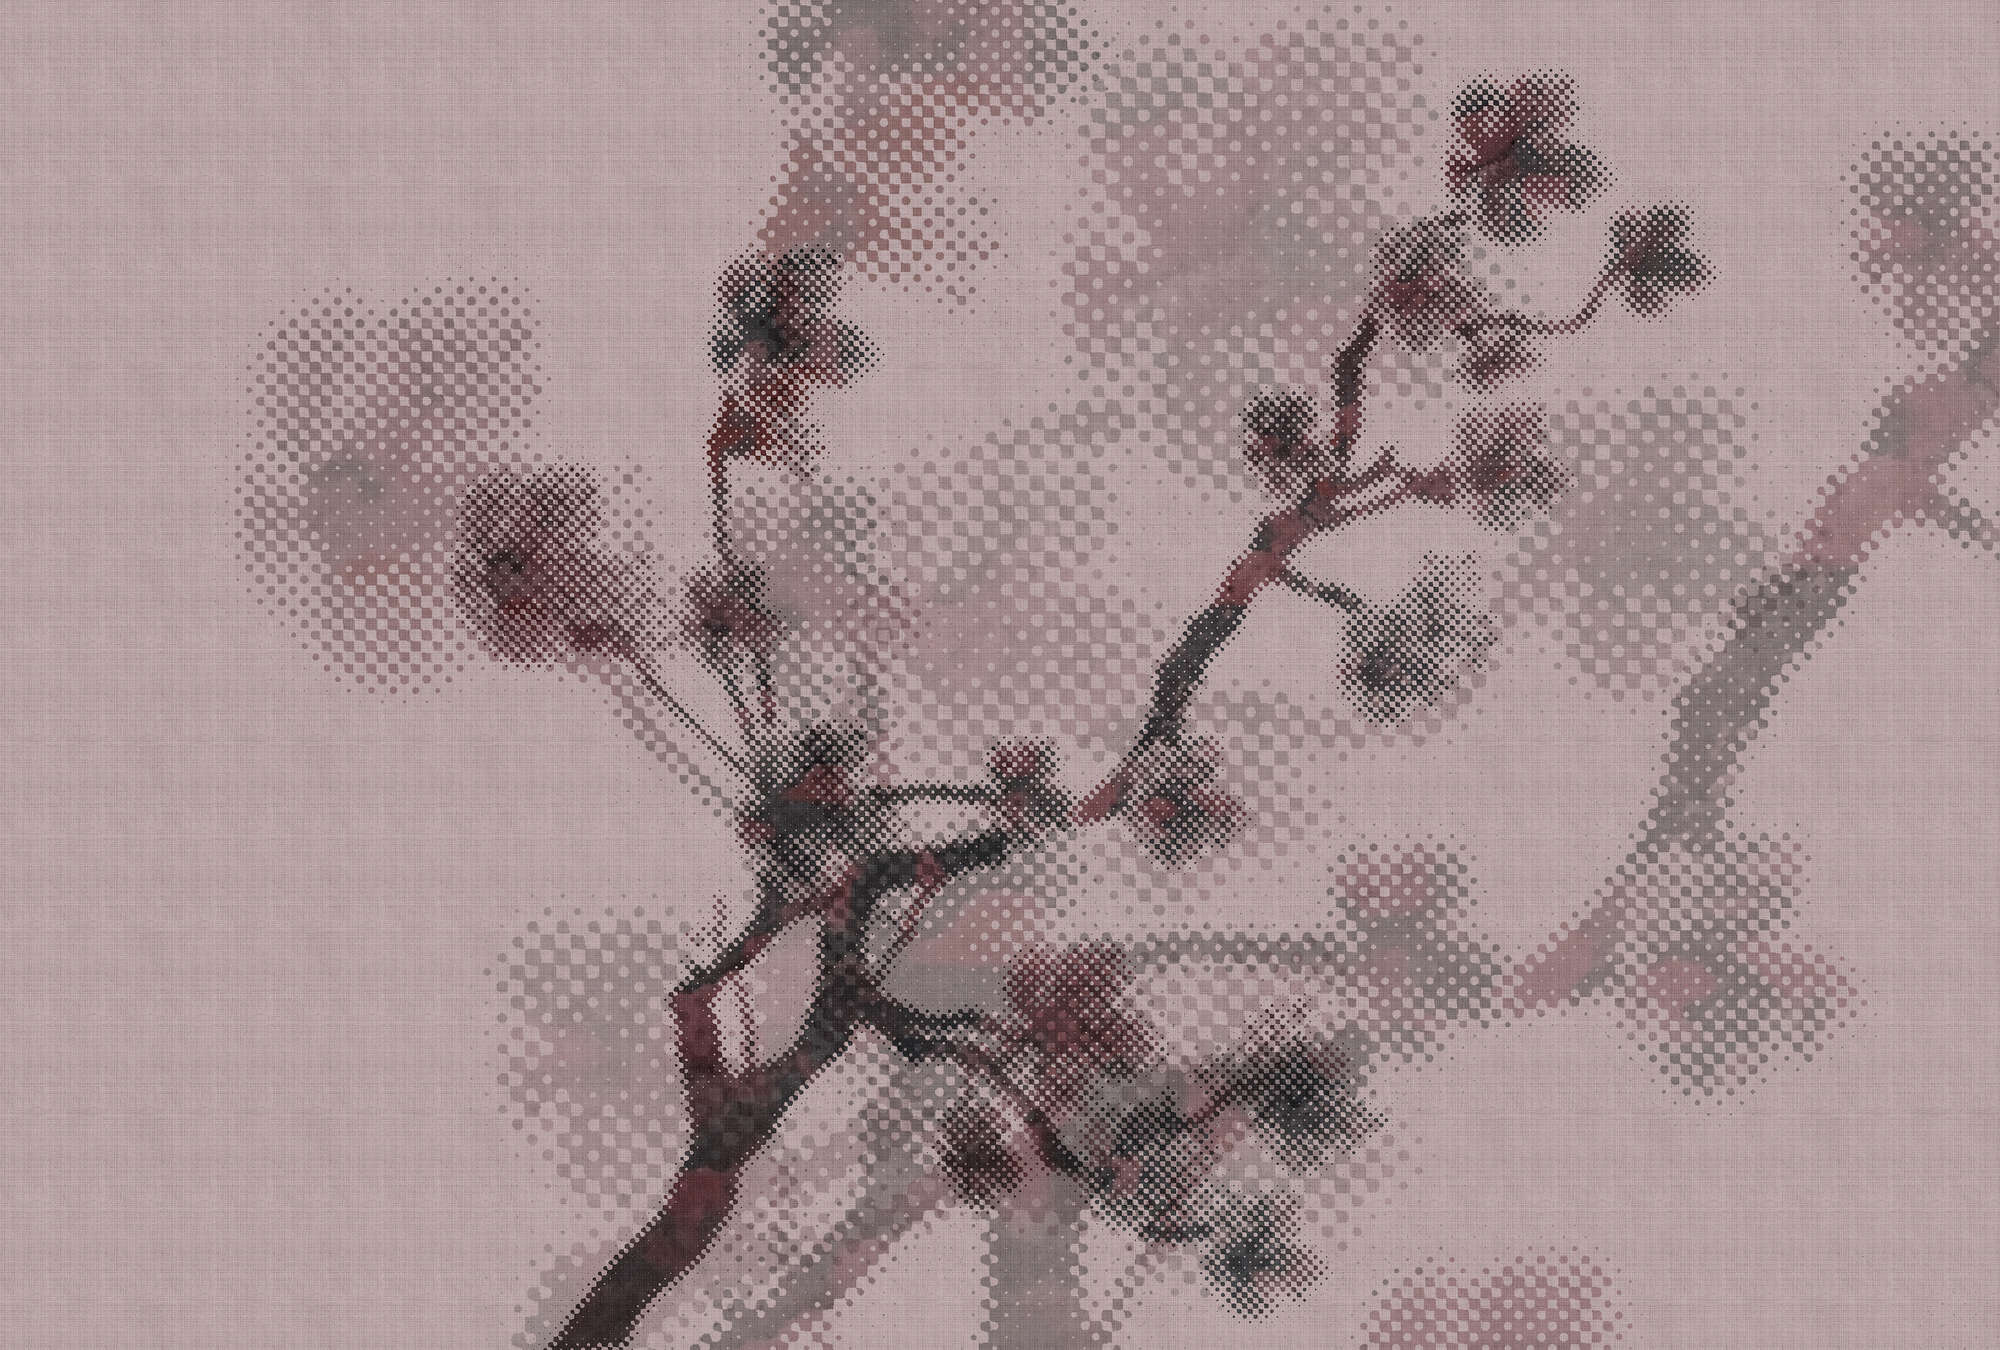             Twigs 3 - Fototapete mit Natur- Motiv & Pixeldesign - naturleinen Struktur – Rosa | Mattes Glattvlies
        